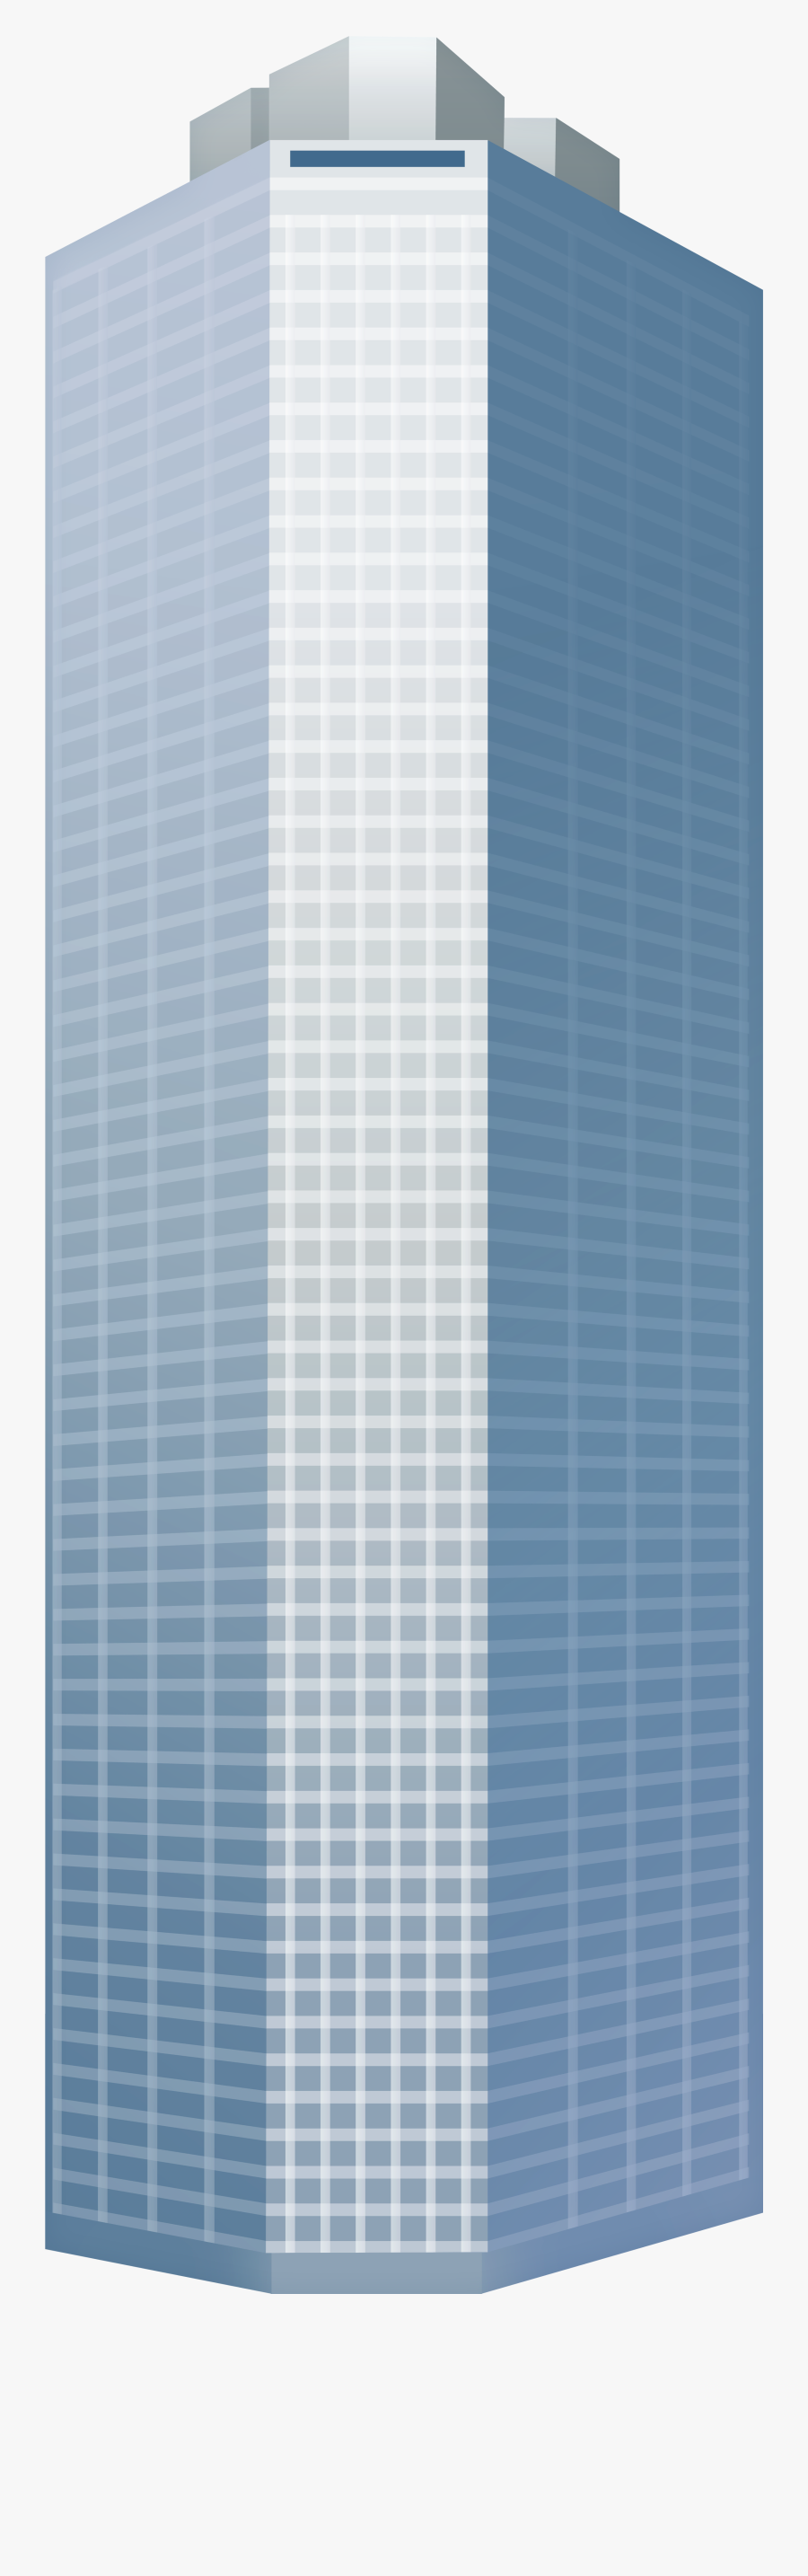 Modern Skyscraper Png Clipart - Architecture, Transparent Clipart